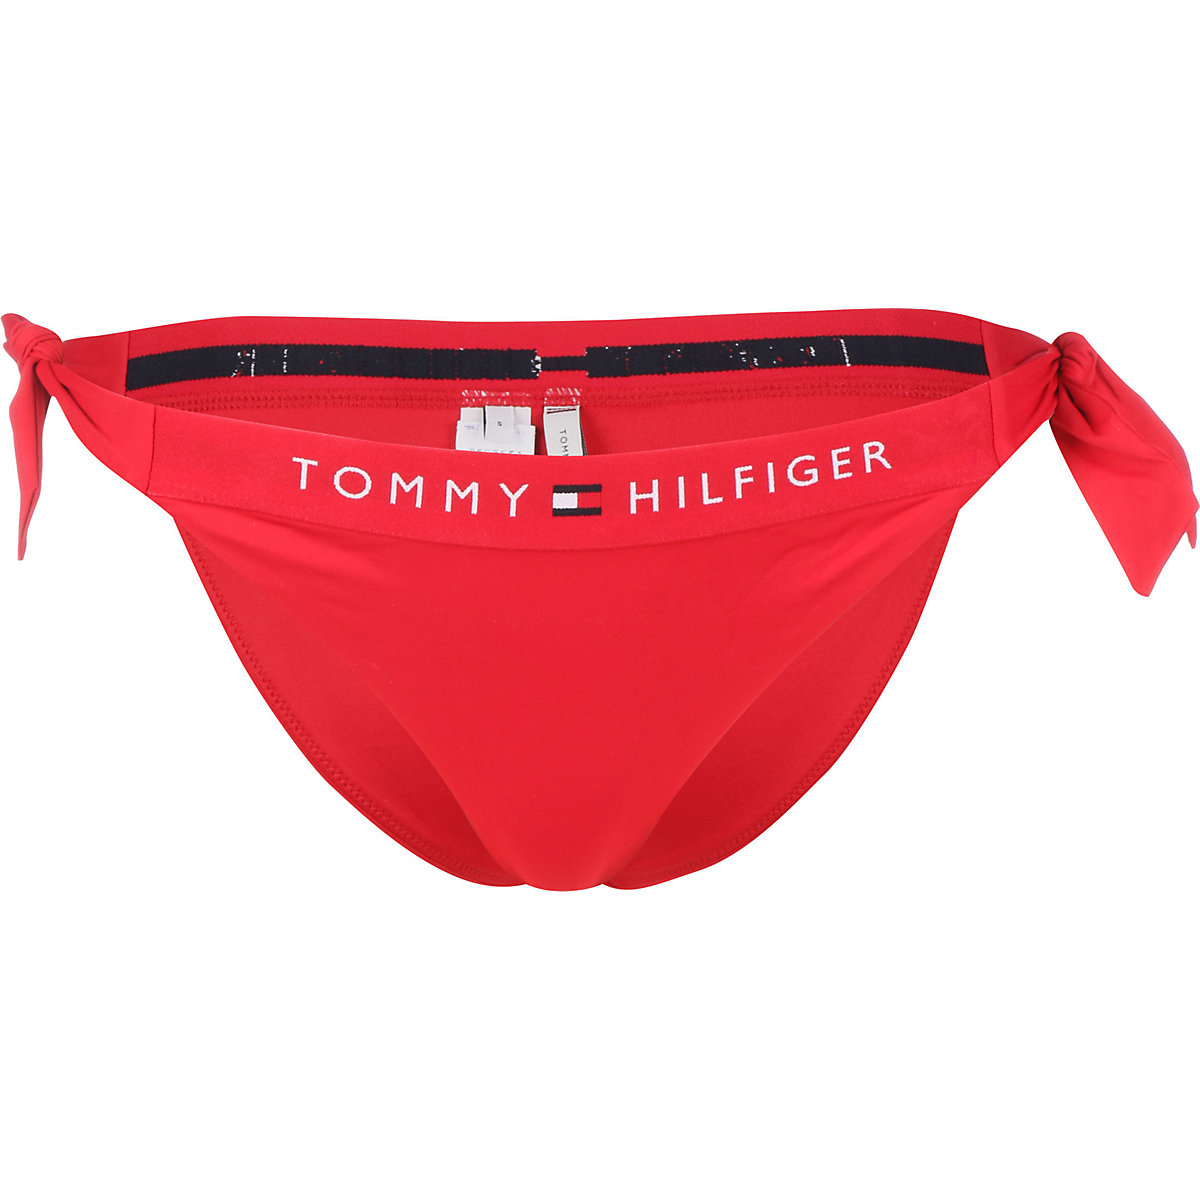 TOMMY HILFIGER Tommy Hilfiger Bikini Unterteil Side Tie Cheeky Bikini-Hosen rot/weiß